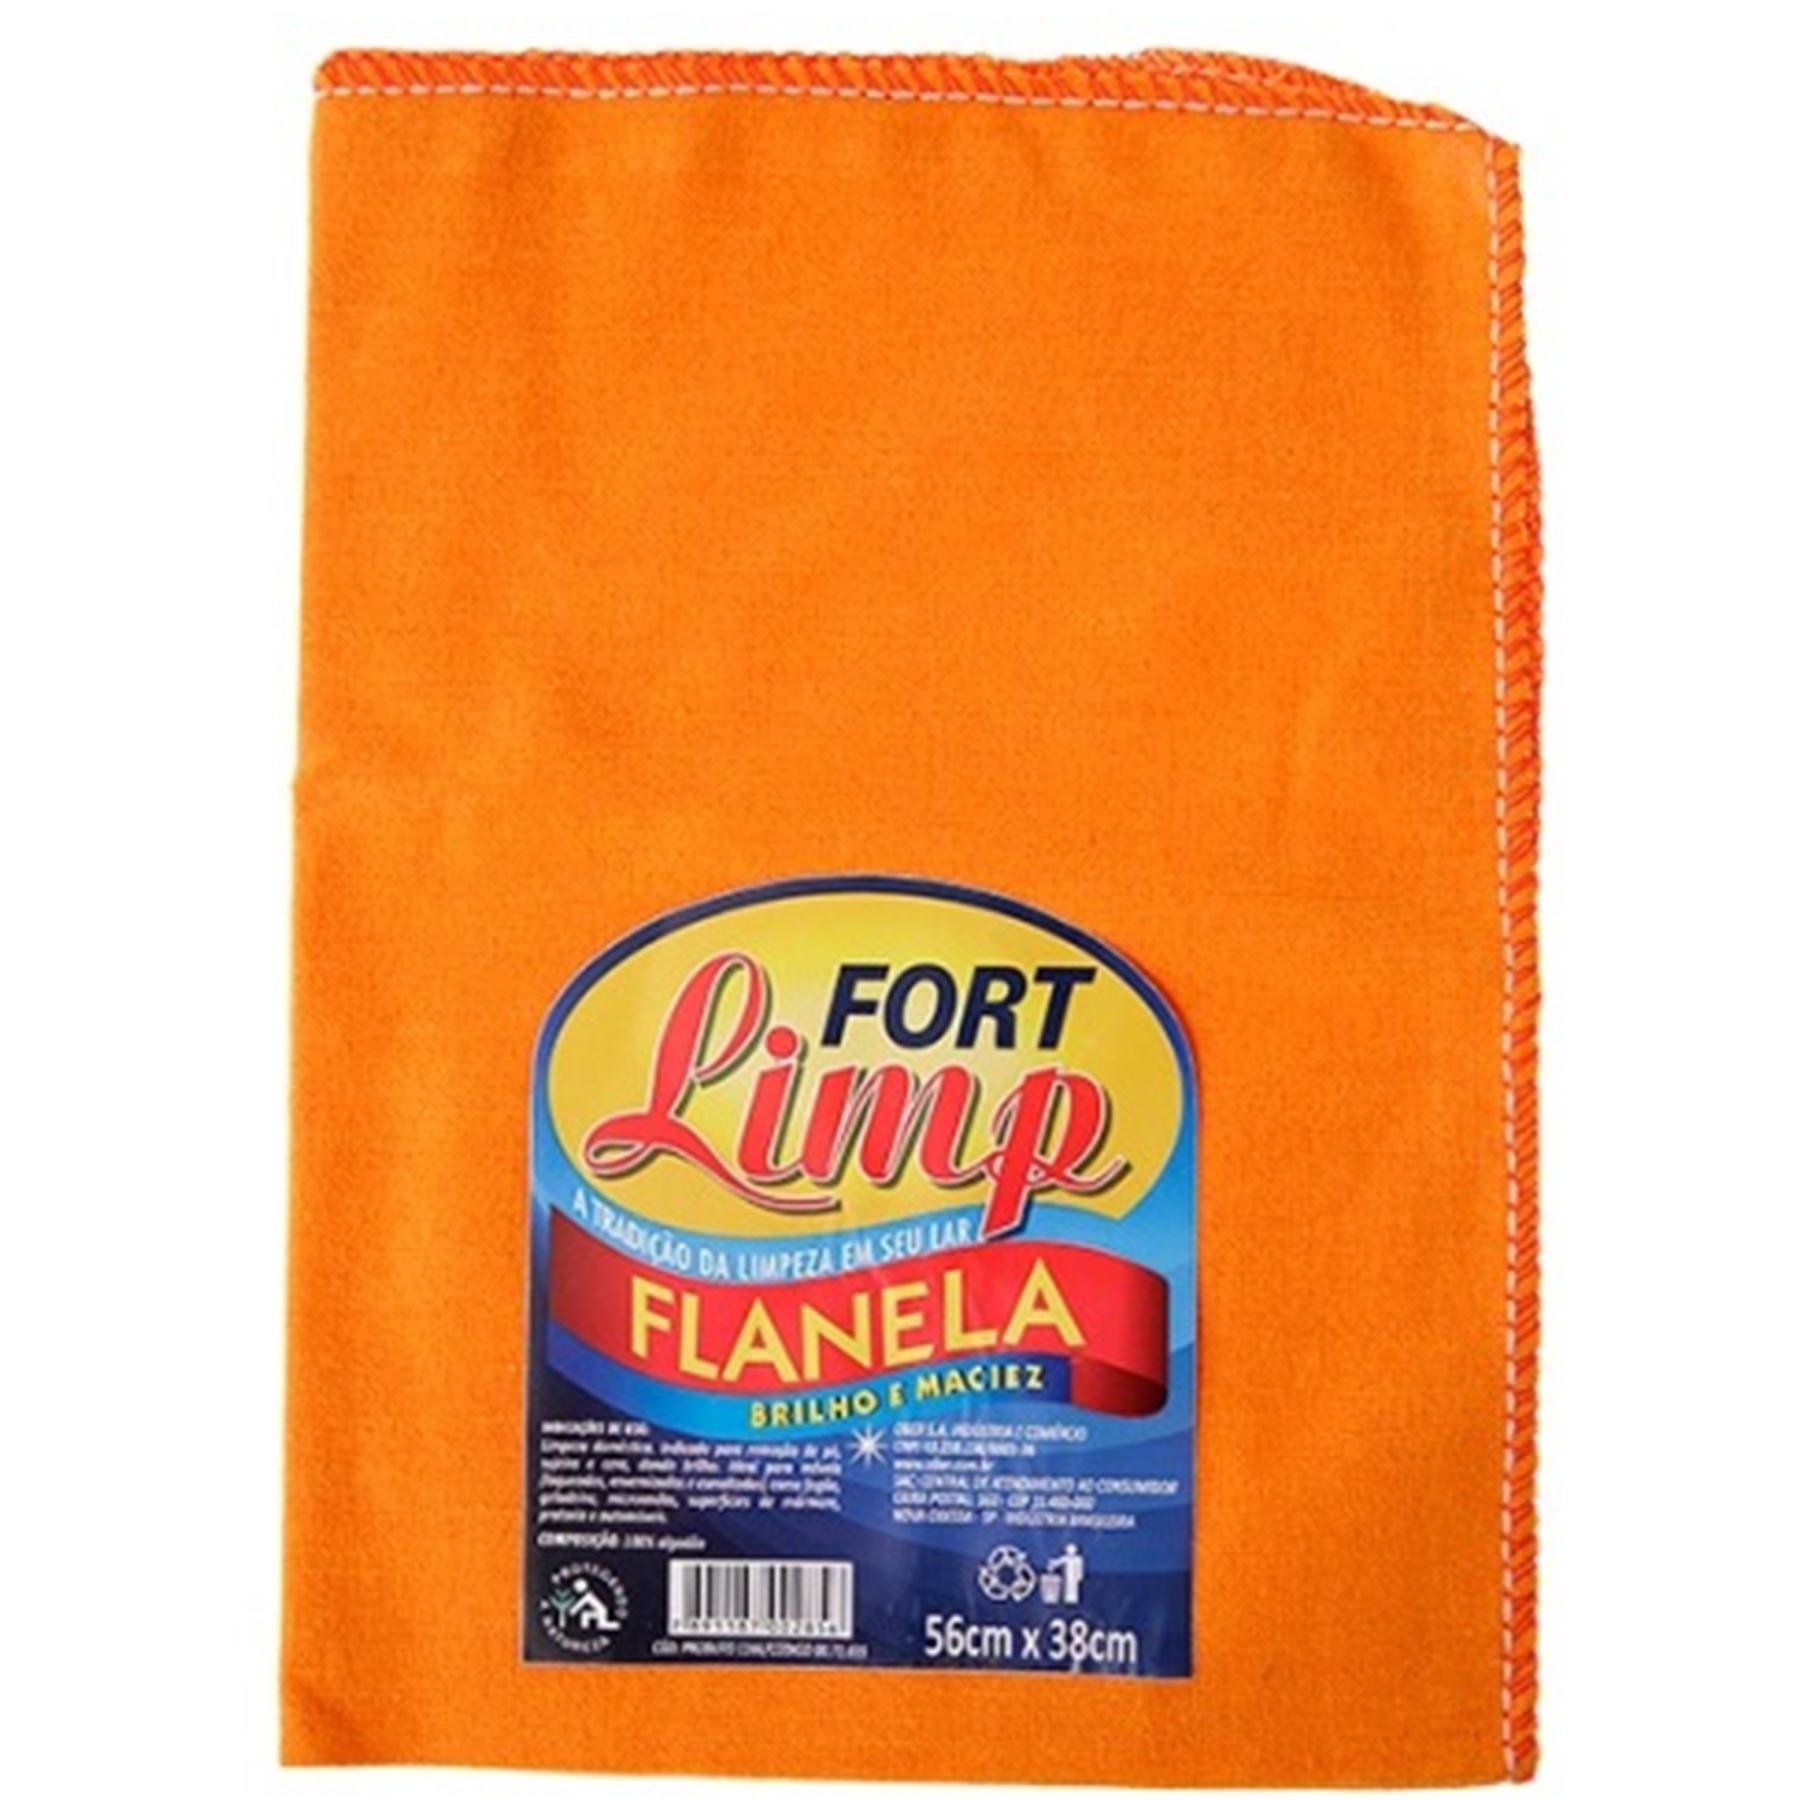 Flanela Fort Limp 56x38